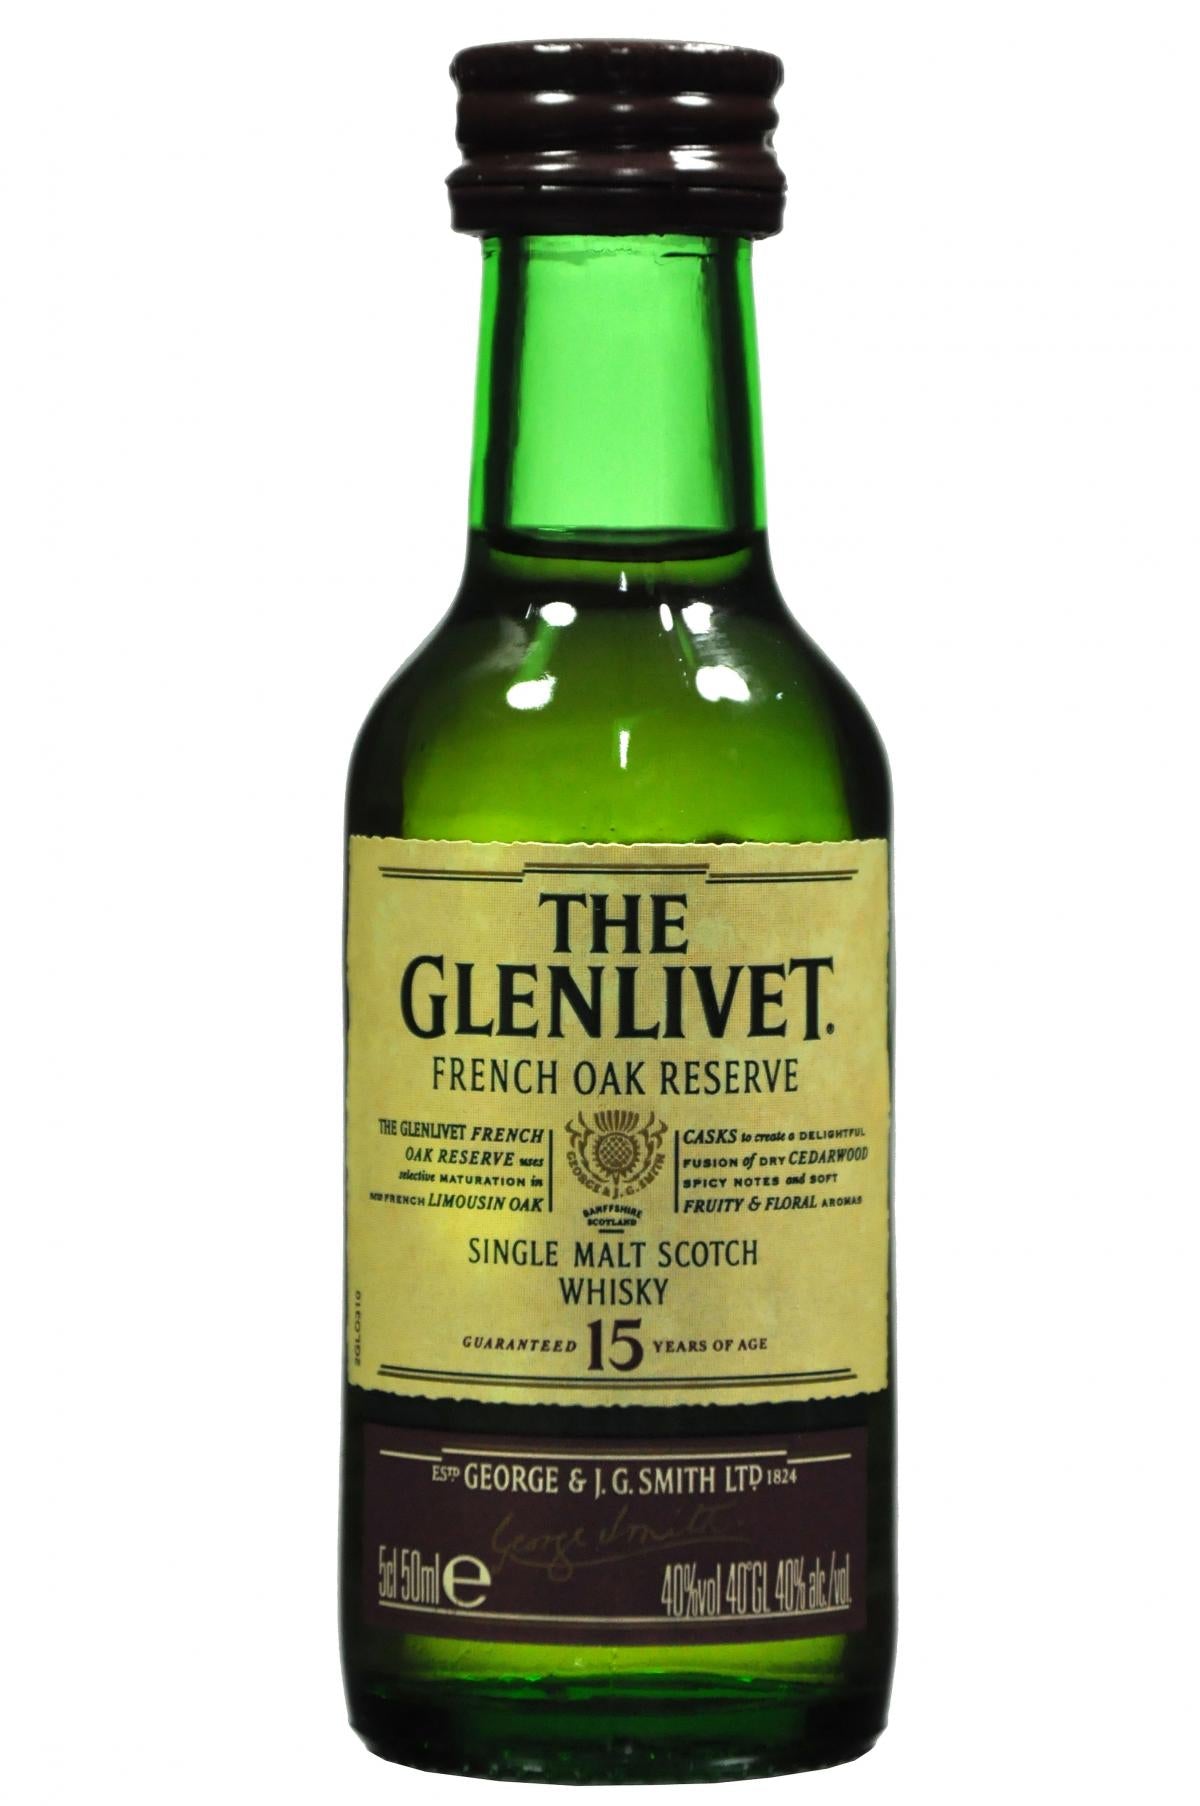 glenlivet 15 year old, french oak reserve miniature, single malt scotch whisky